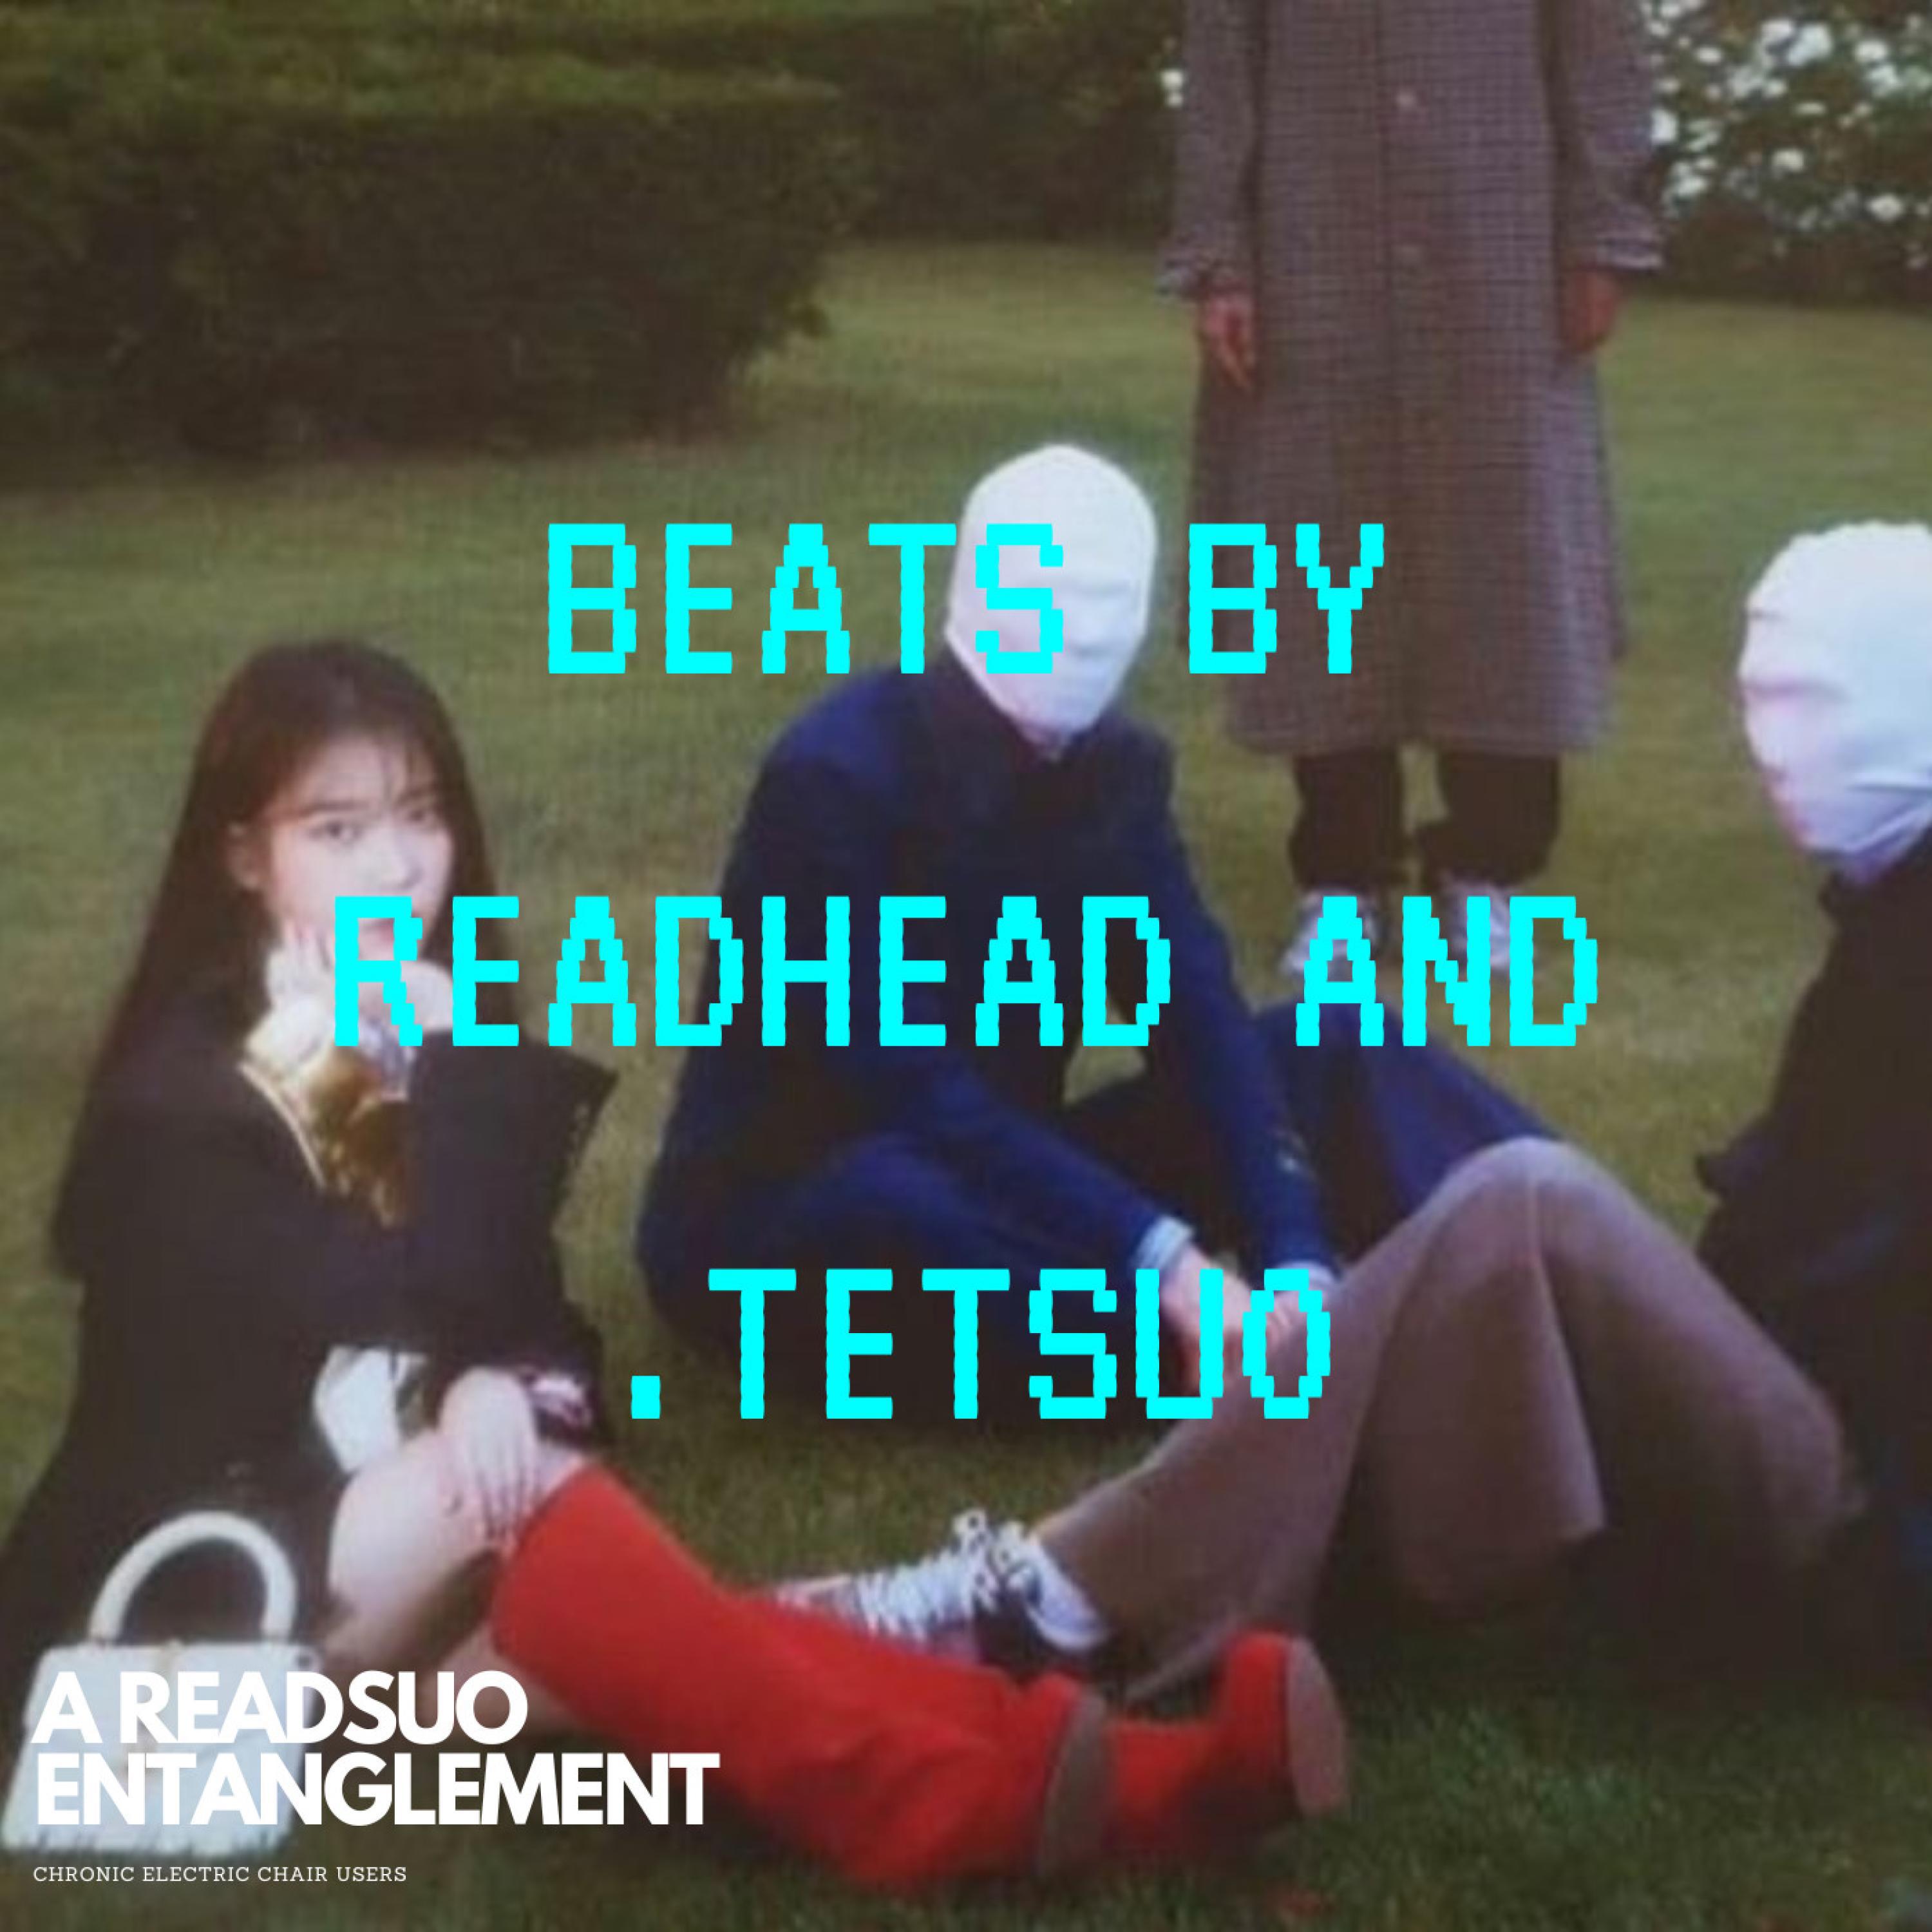 .Tetsuo - cd player readsuo the first (feat. Louis Farkon, readhead & readsuo)